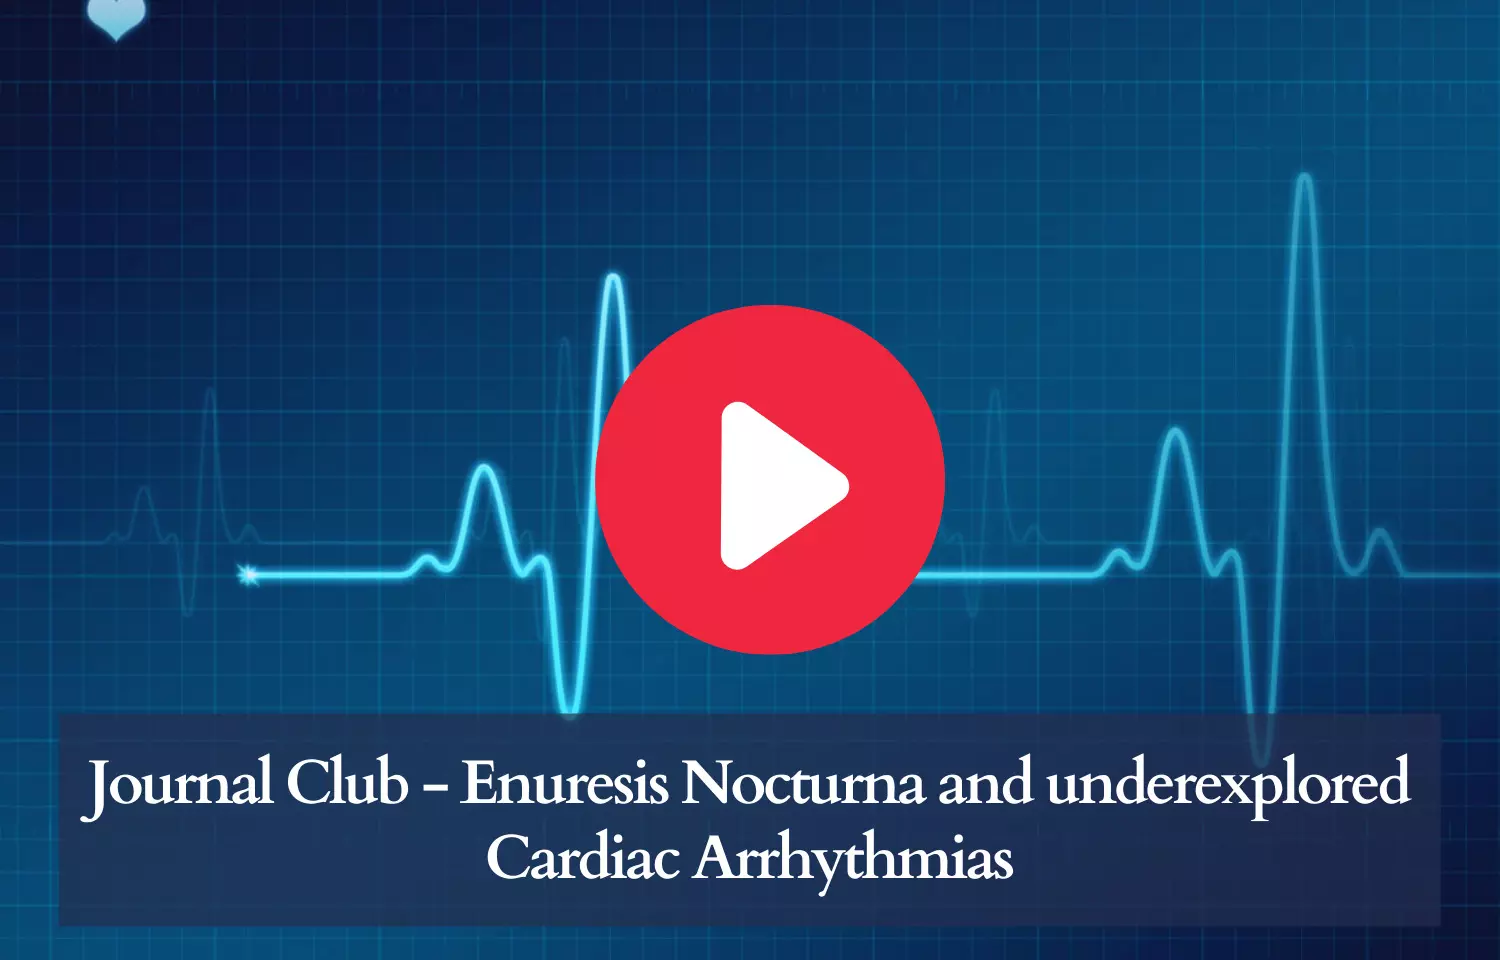 Journal Club - Enuresis Nocturna connected to underexplored Cardiac Arrhythmias